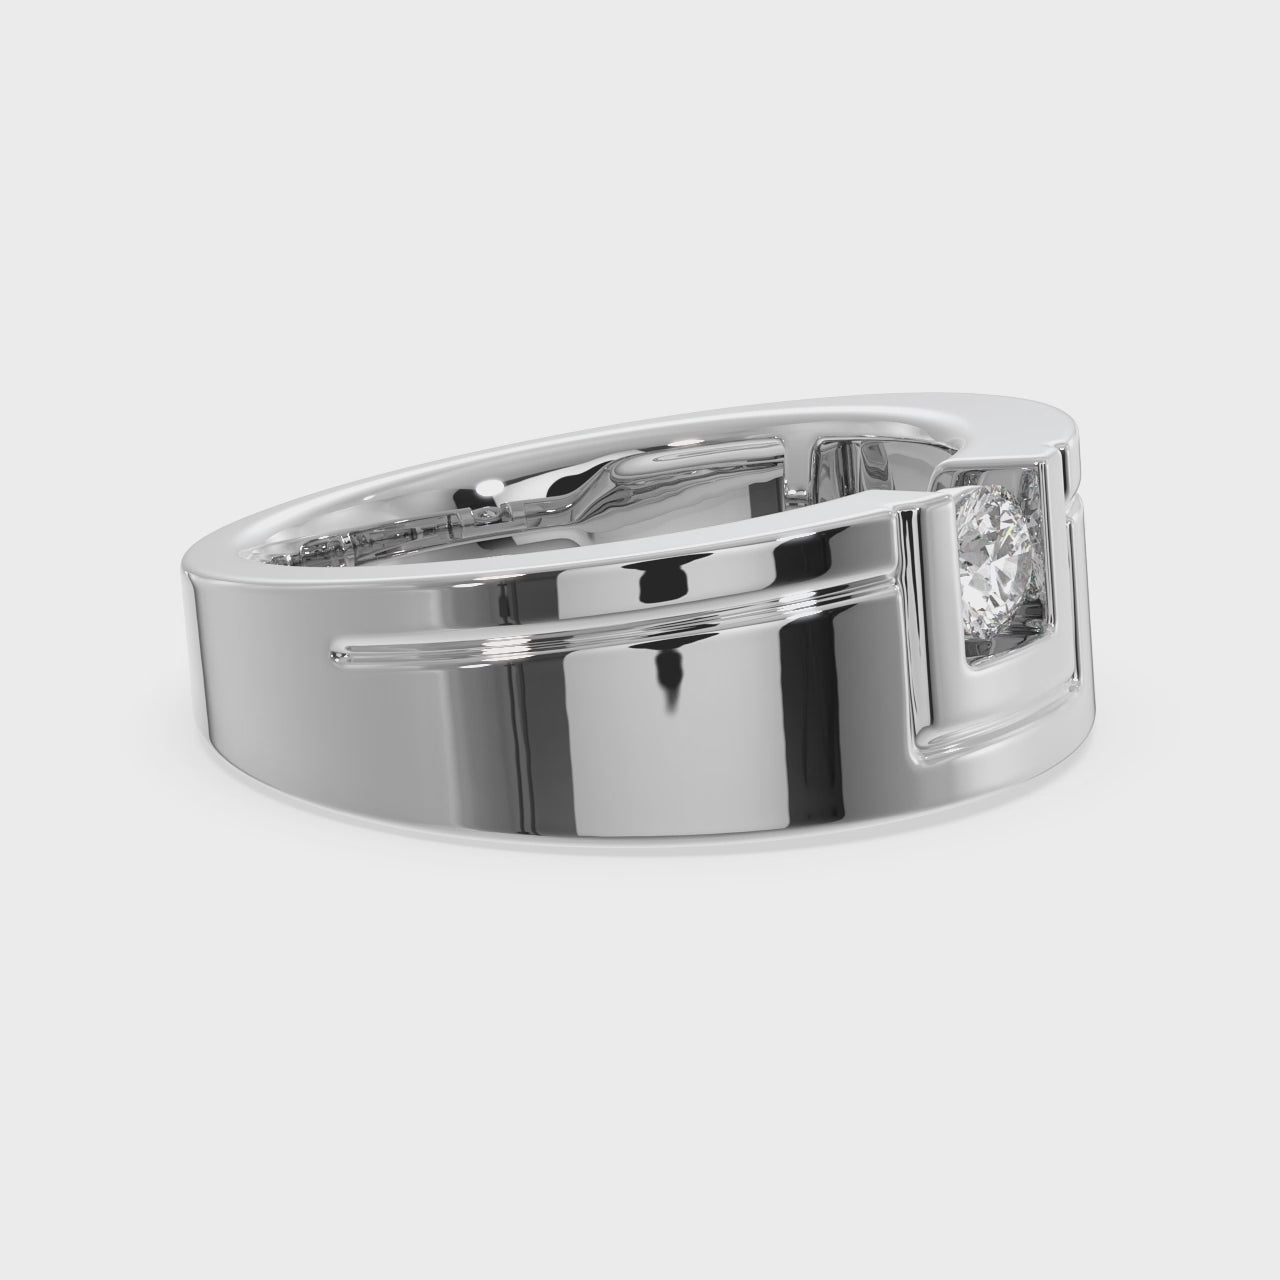 SY Men's Ring in Platinum, Bezel-Set Diamond Ring